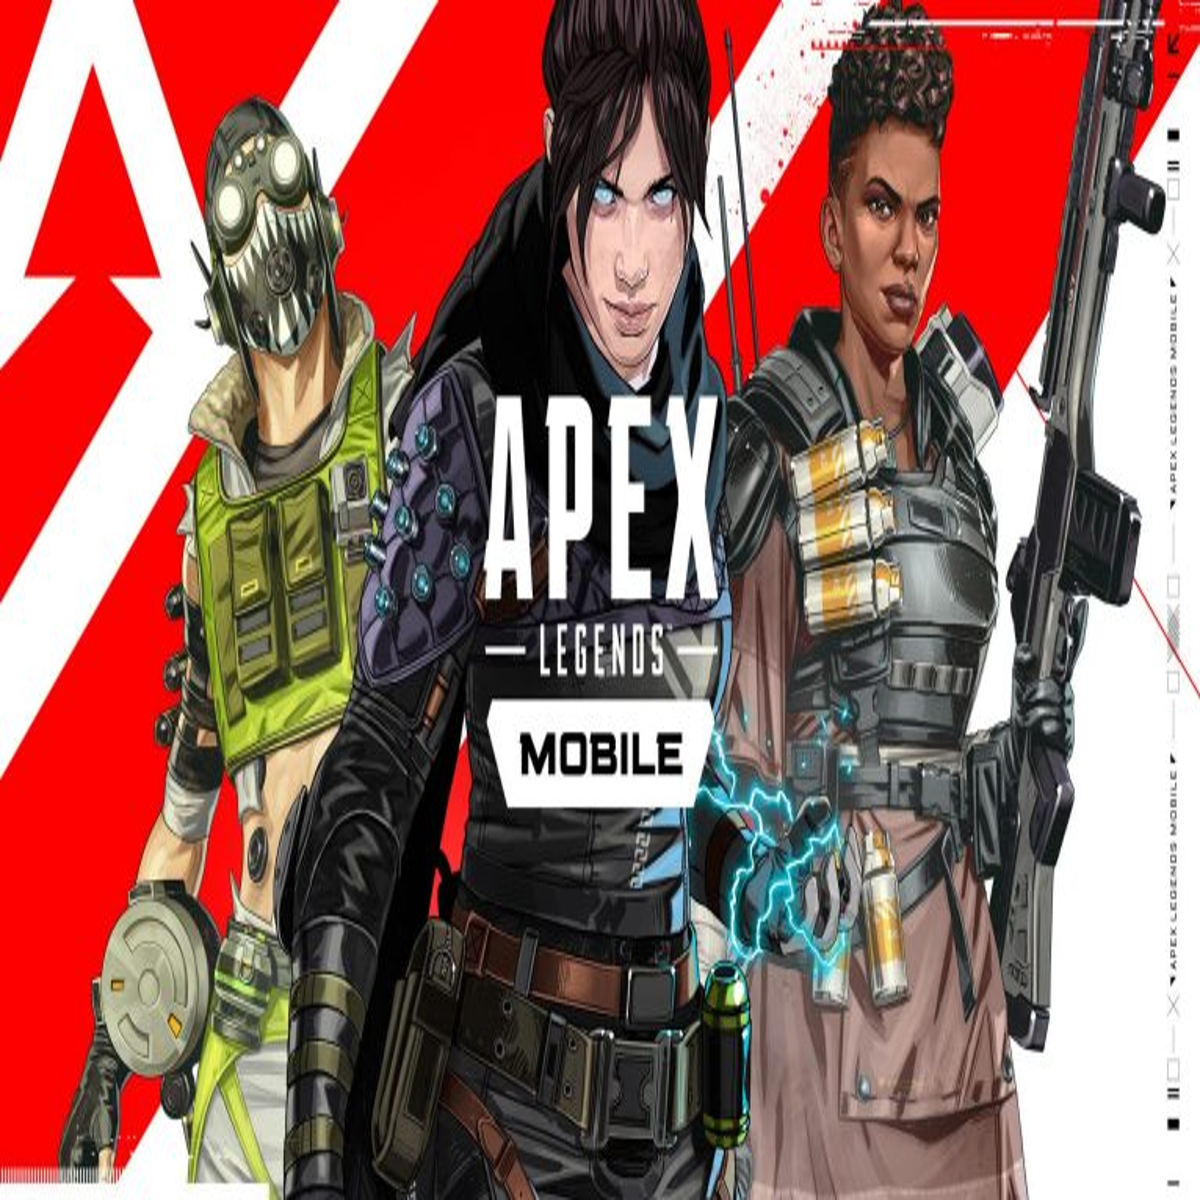 Apex Legends Mobile Review - Pocket-Sized Royale - GameSpot